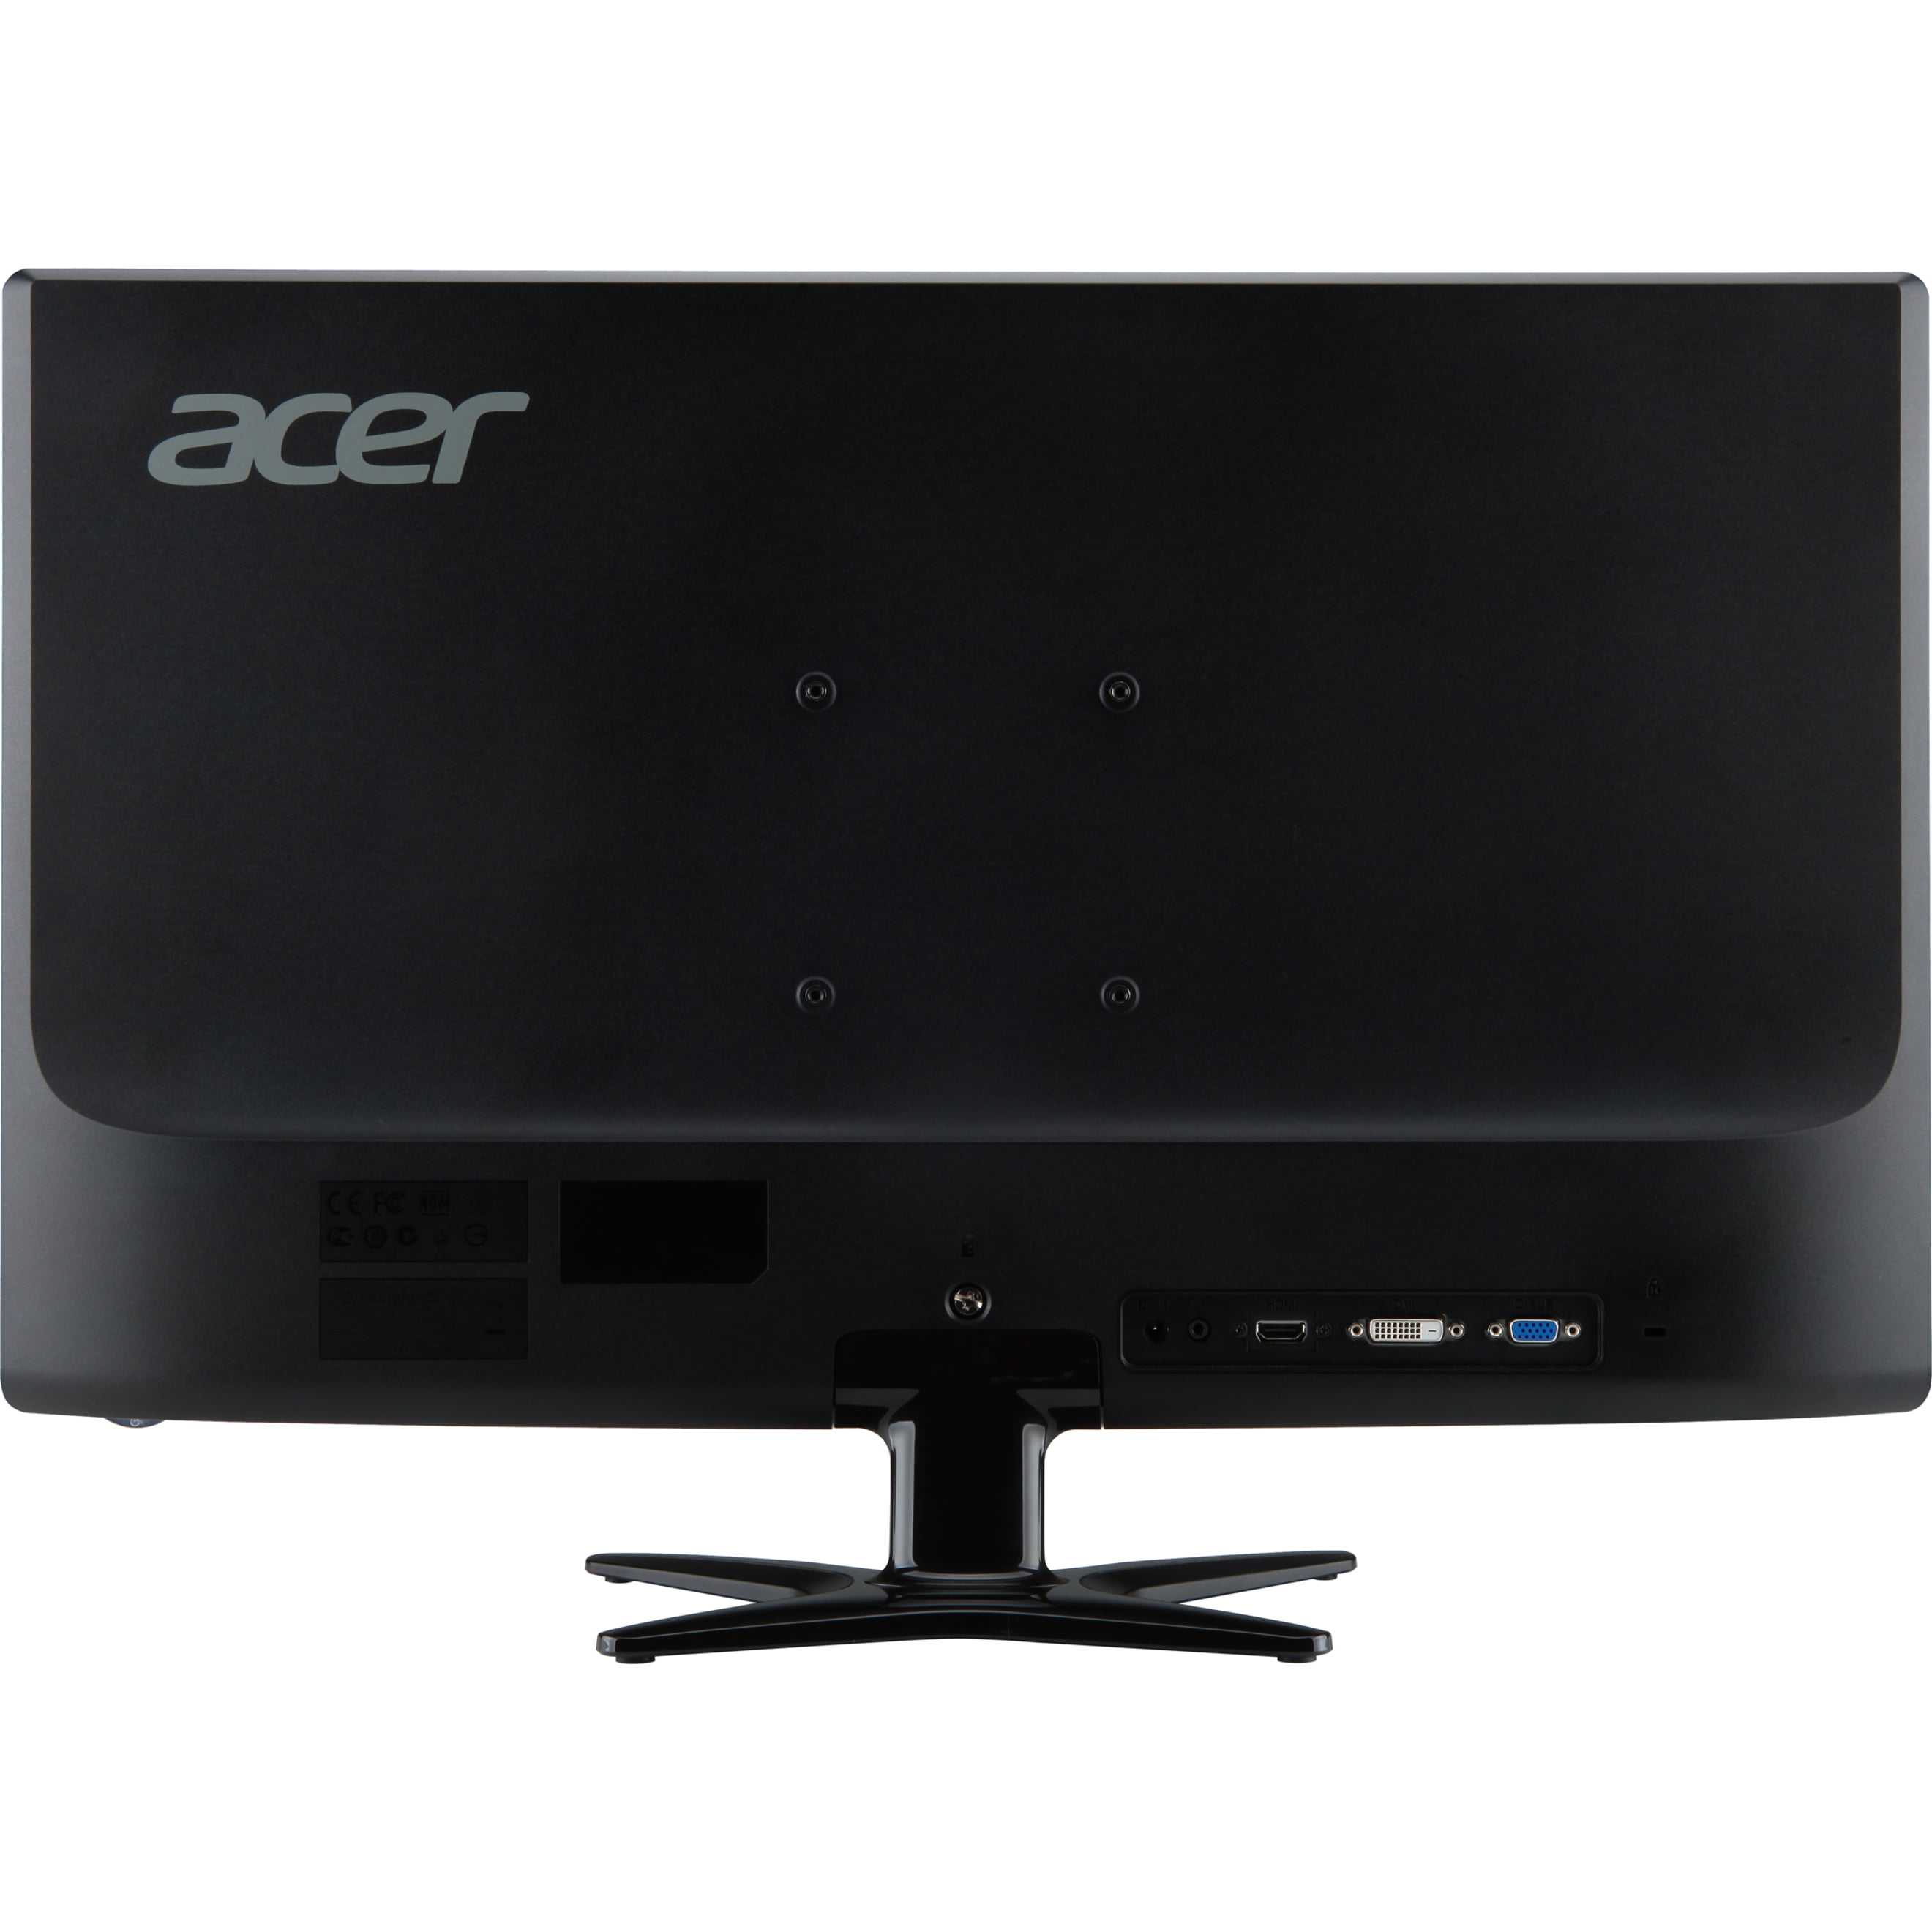 HDMI, DVI & VGA Ports 1920 x 1080 Acer G276HL Kbmidx 27 Full HD VA Zero Frame Monitor with Built-in Speakers 